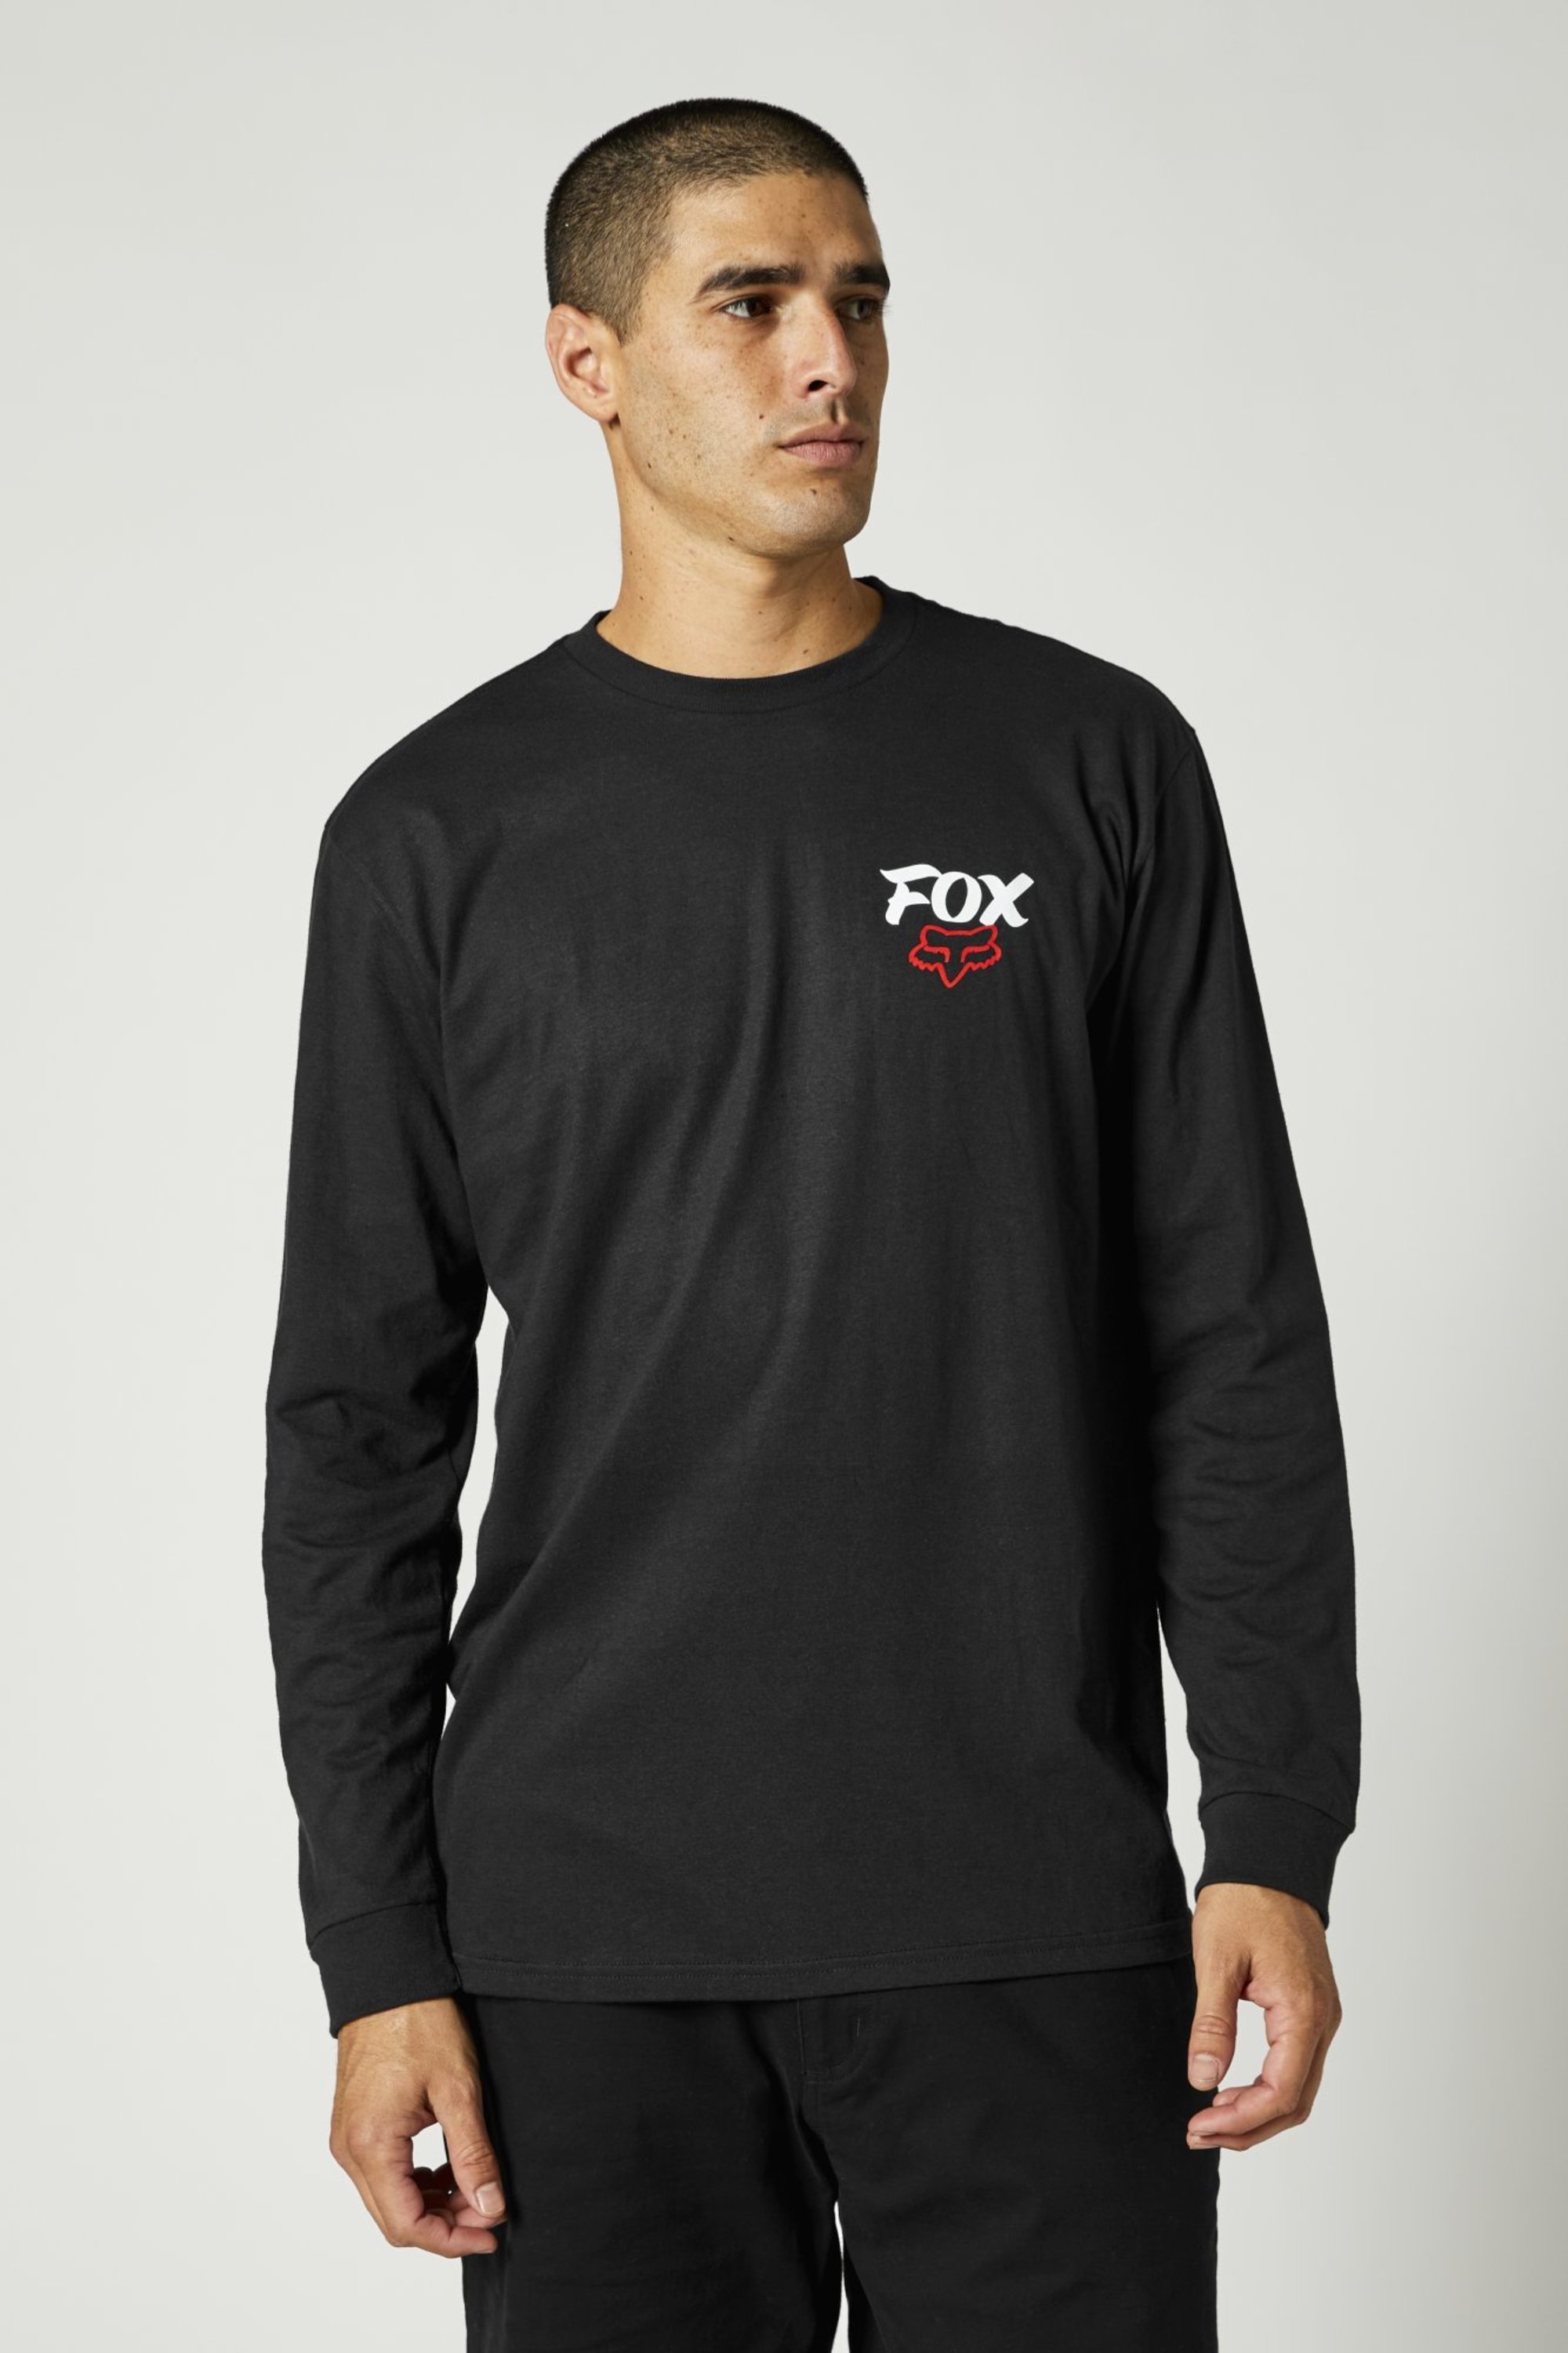 fox racing long sleeve shirts for men traditional